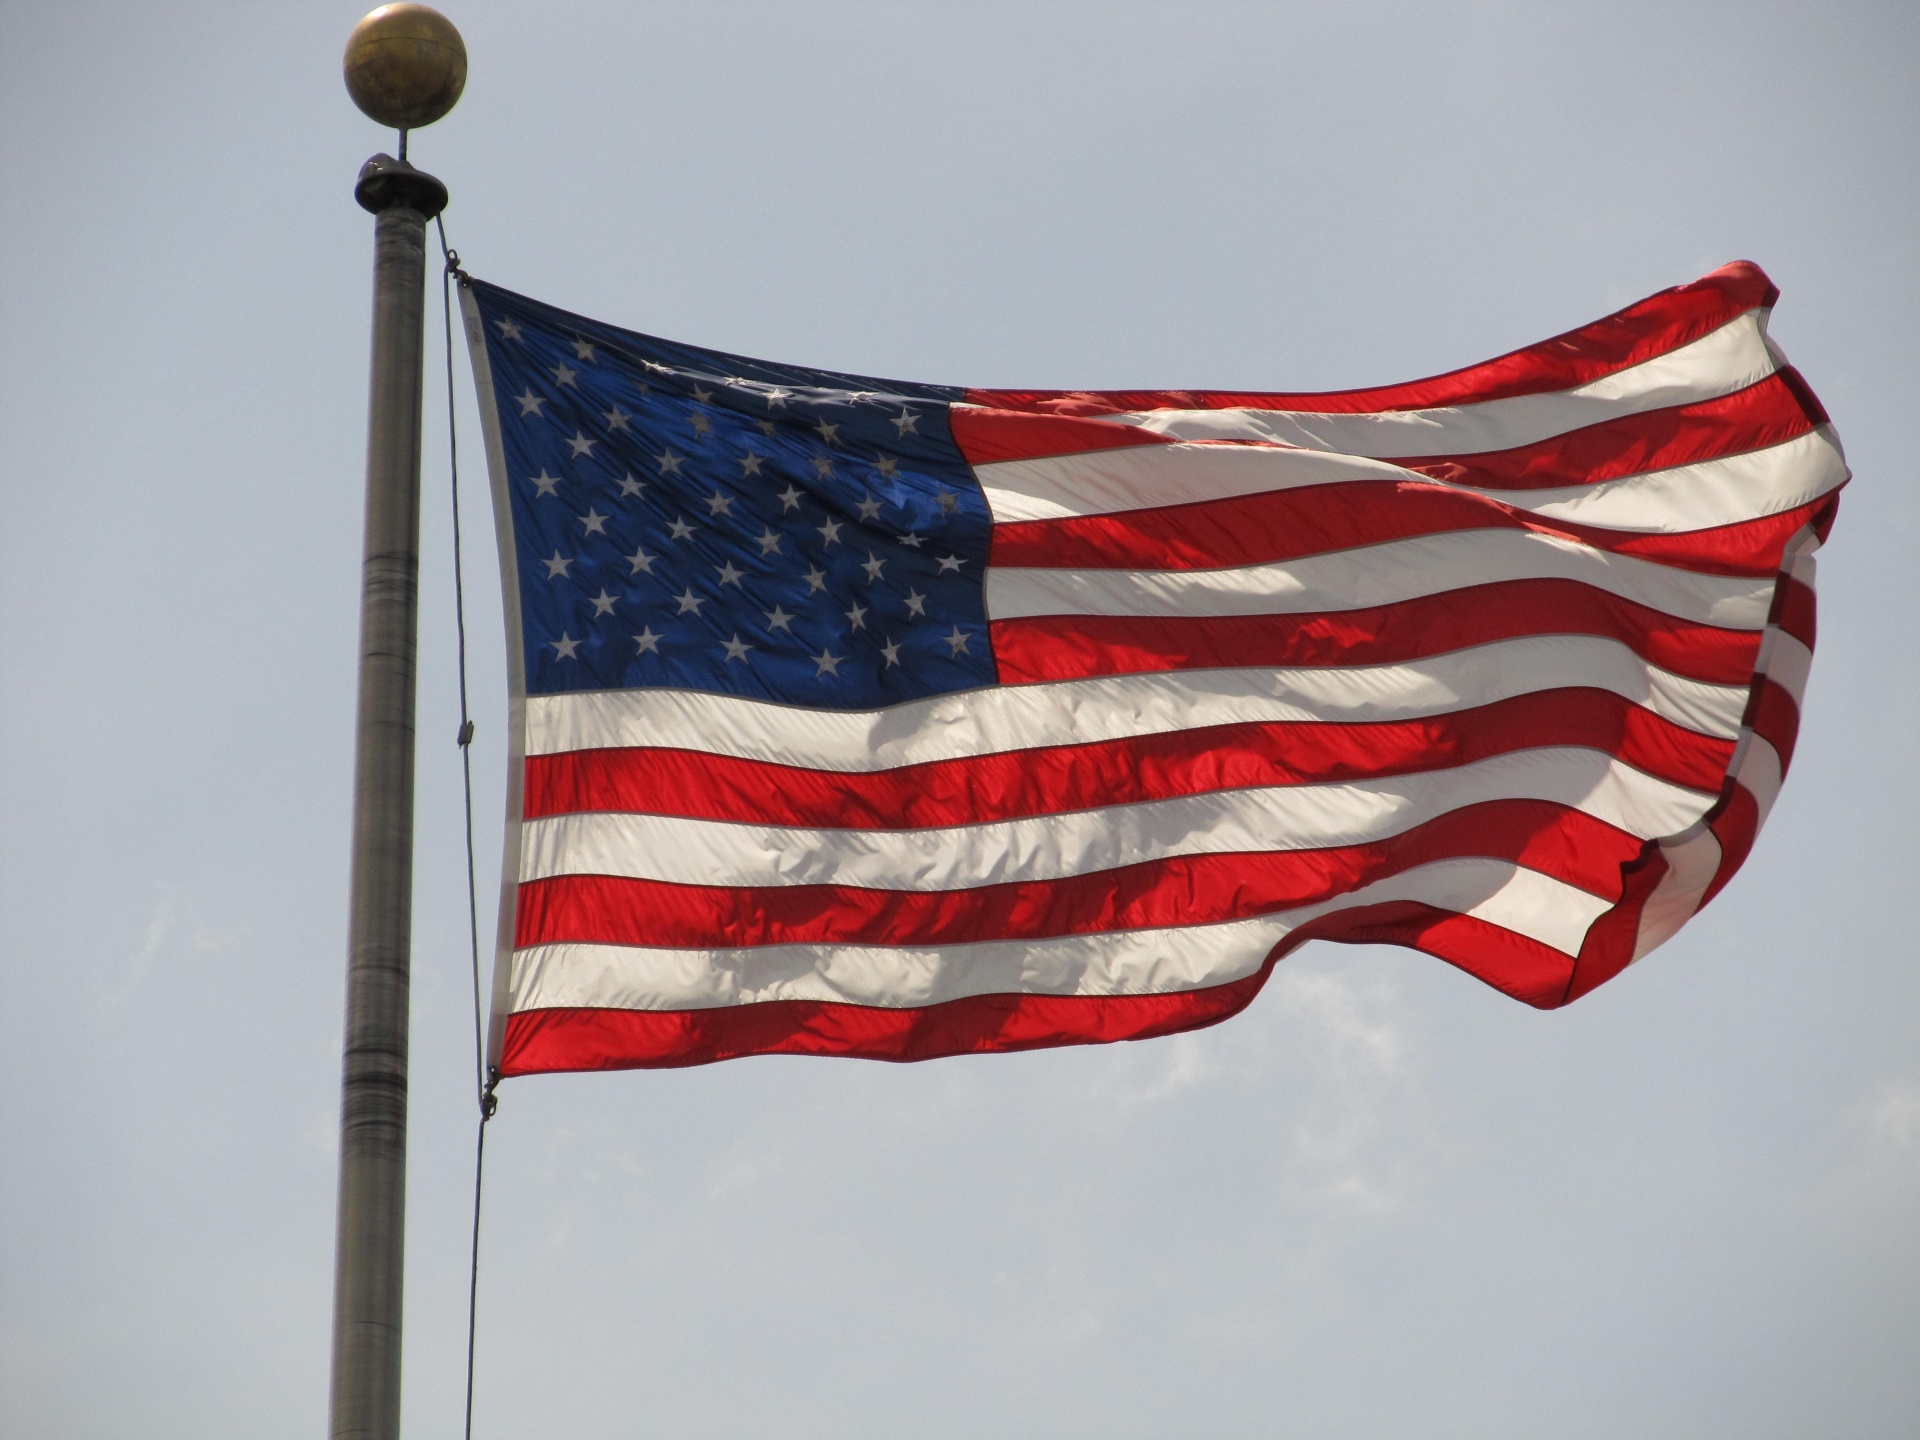 USA's Flag Flying Freely